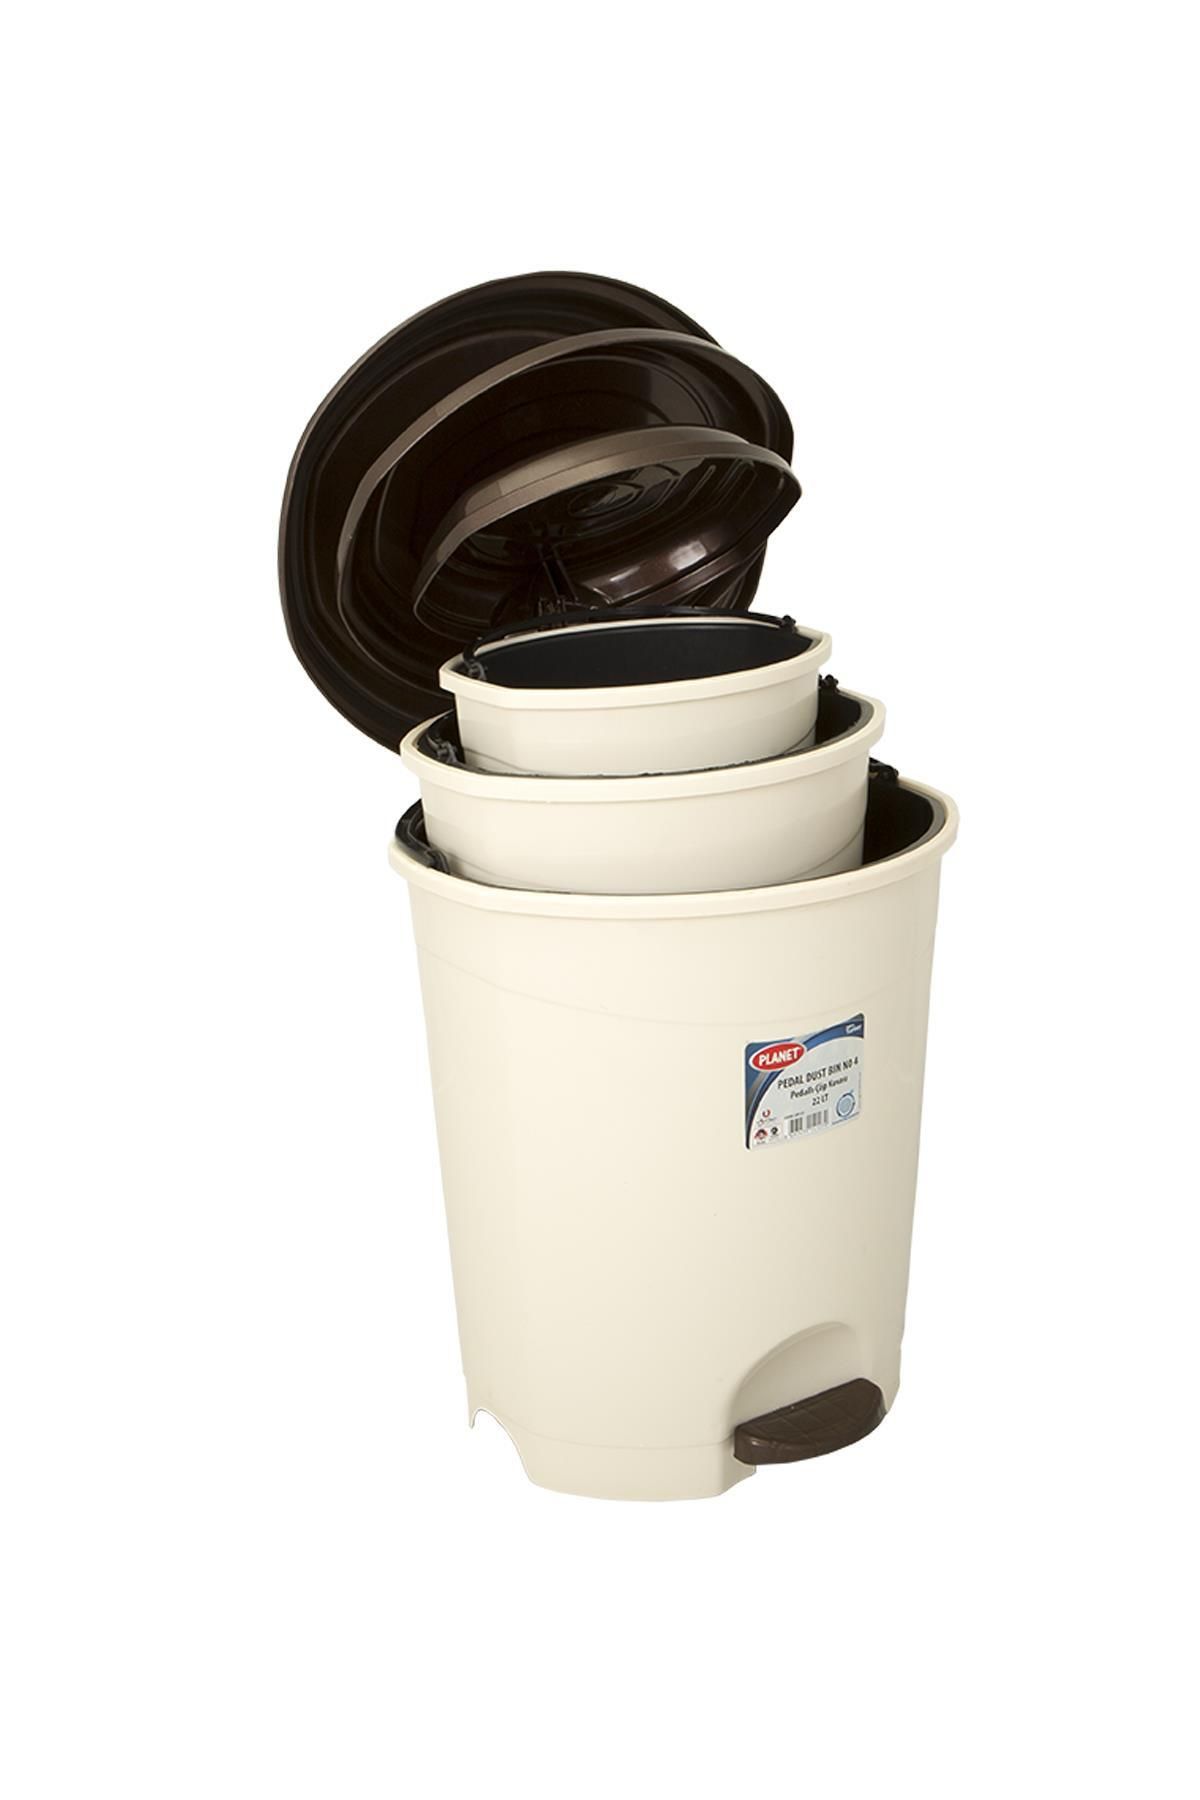 Planet Pedallı Çöp Kovası 3' Lü Set (6-12-22 LT) Yeni Krem / Çikolata Kahve